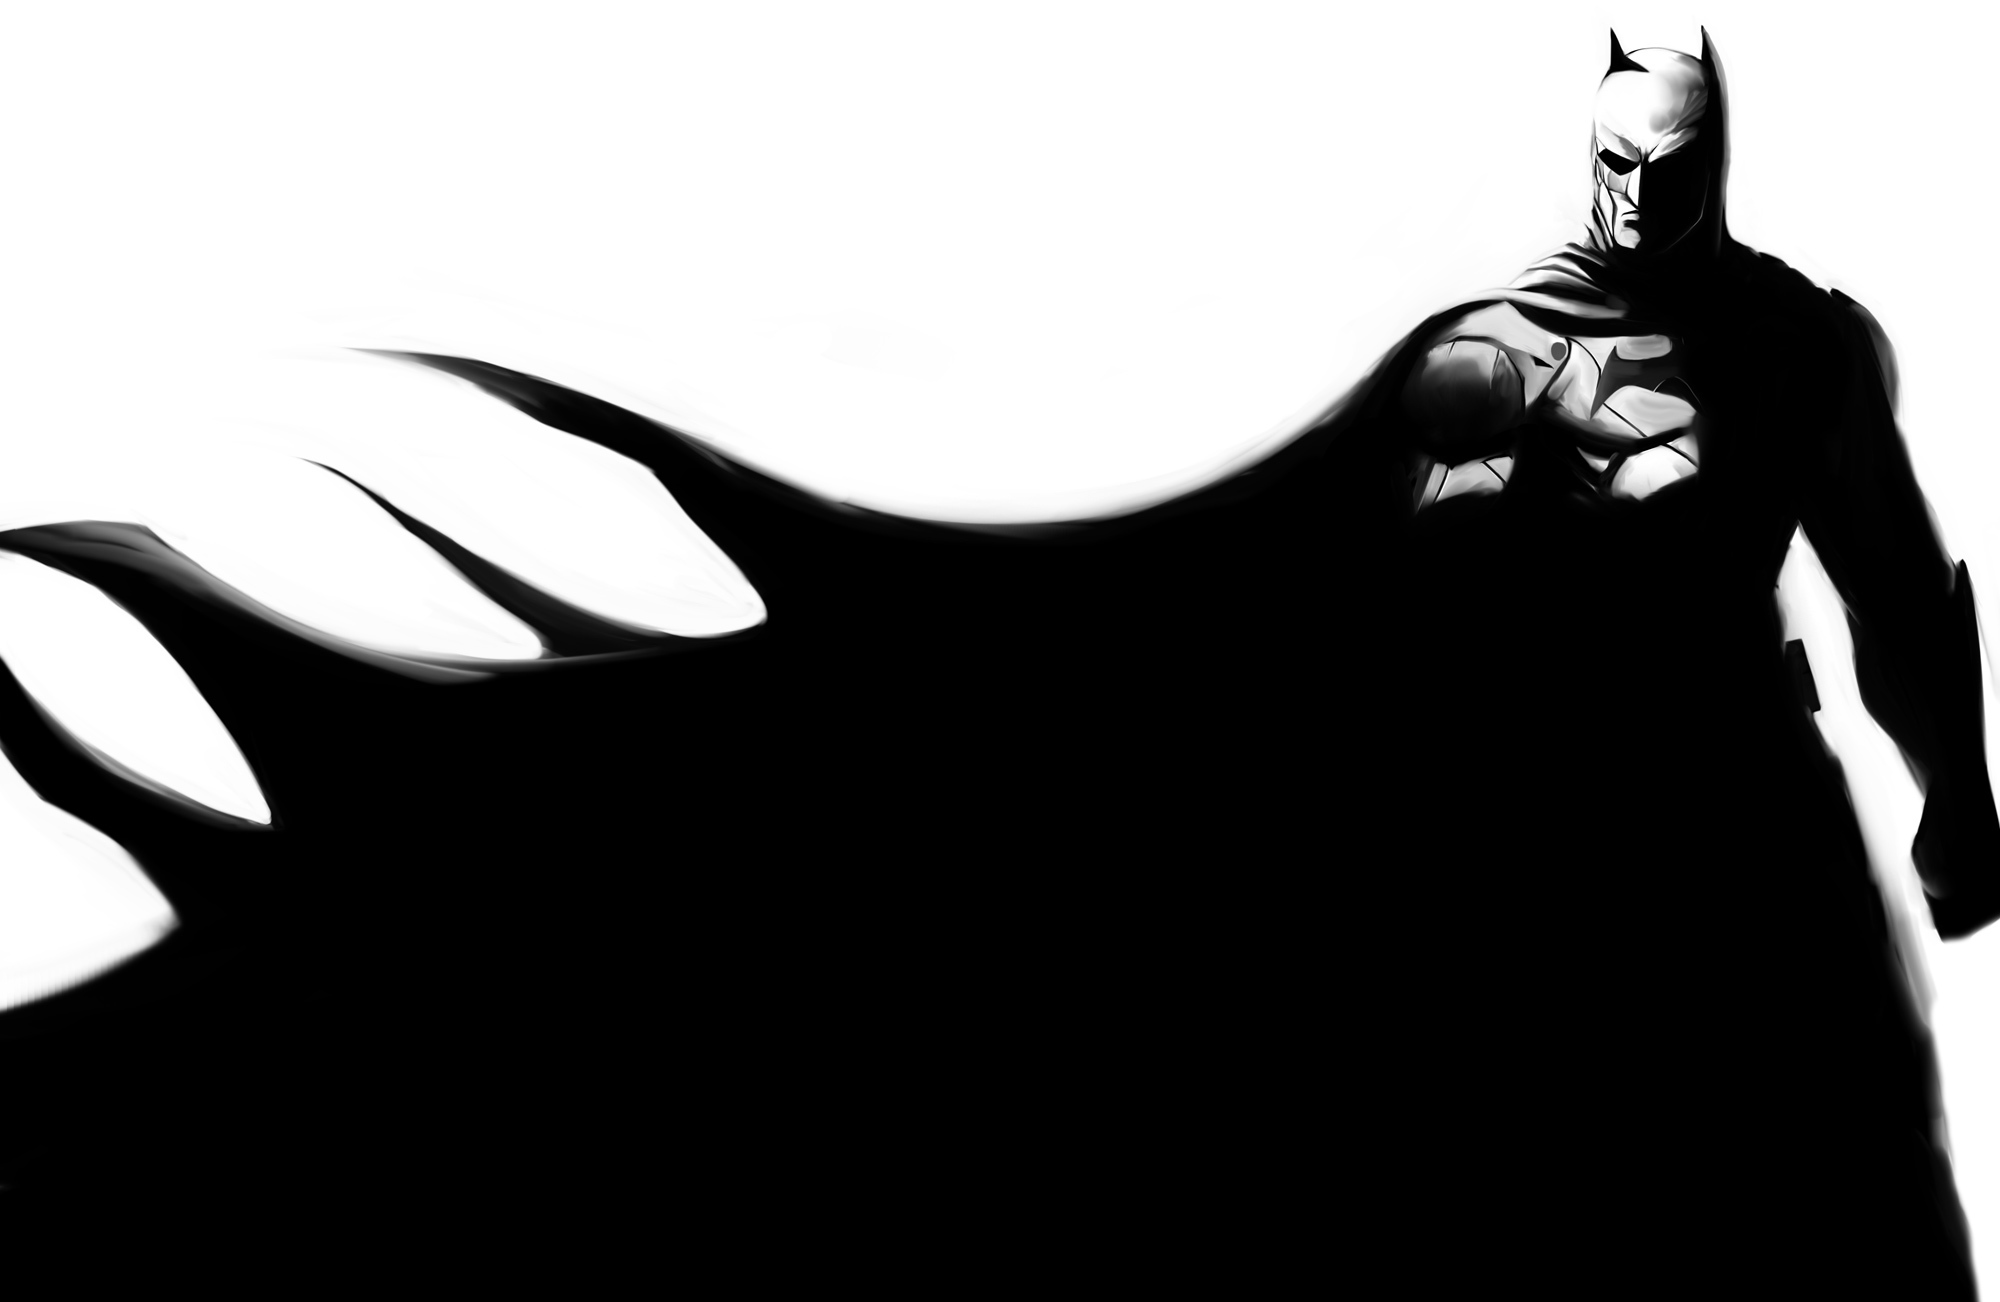 Wallpaper, illustration, silhouette, Batman, cartoon, superhero, Bruce Wayne, ART, black and white, monochrome photography 2000x1302